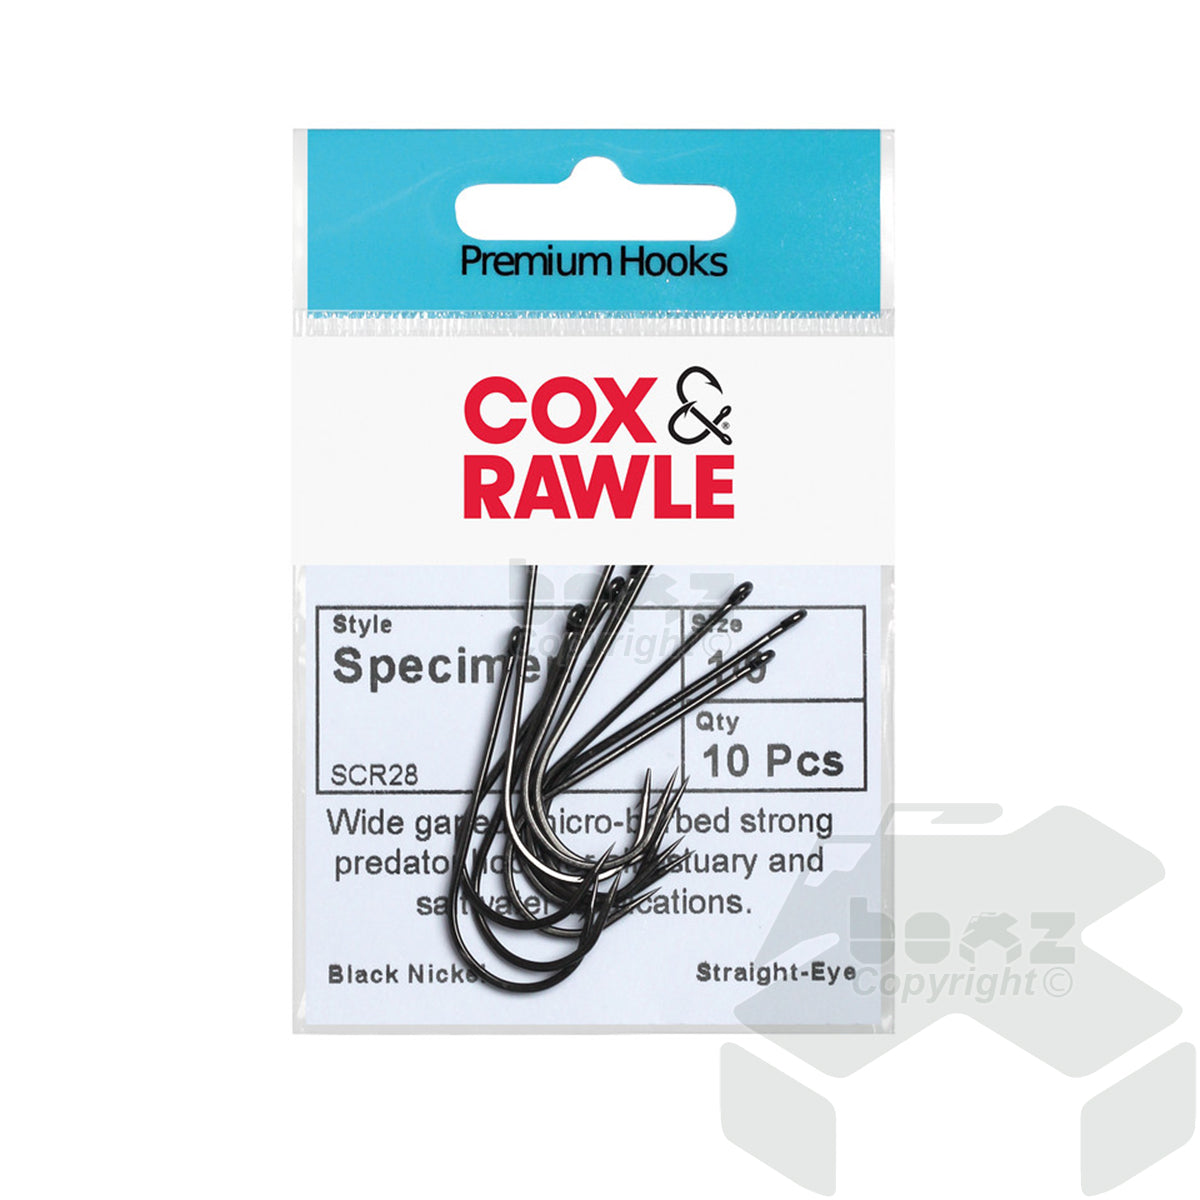 Cox & Rawle Specimen Hooks